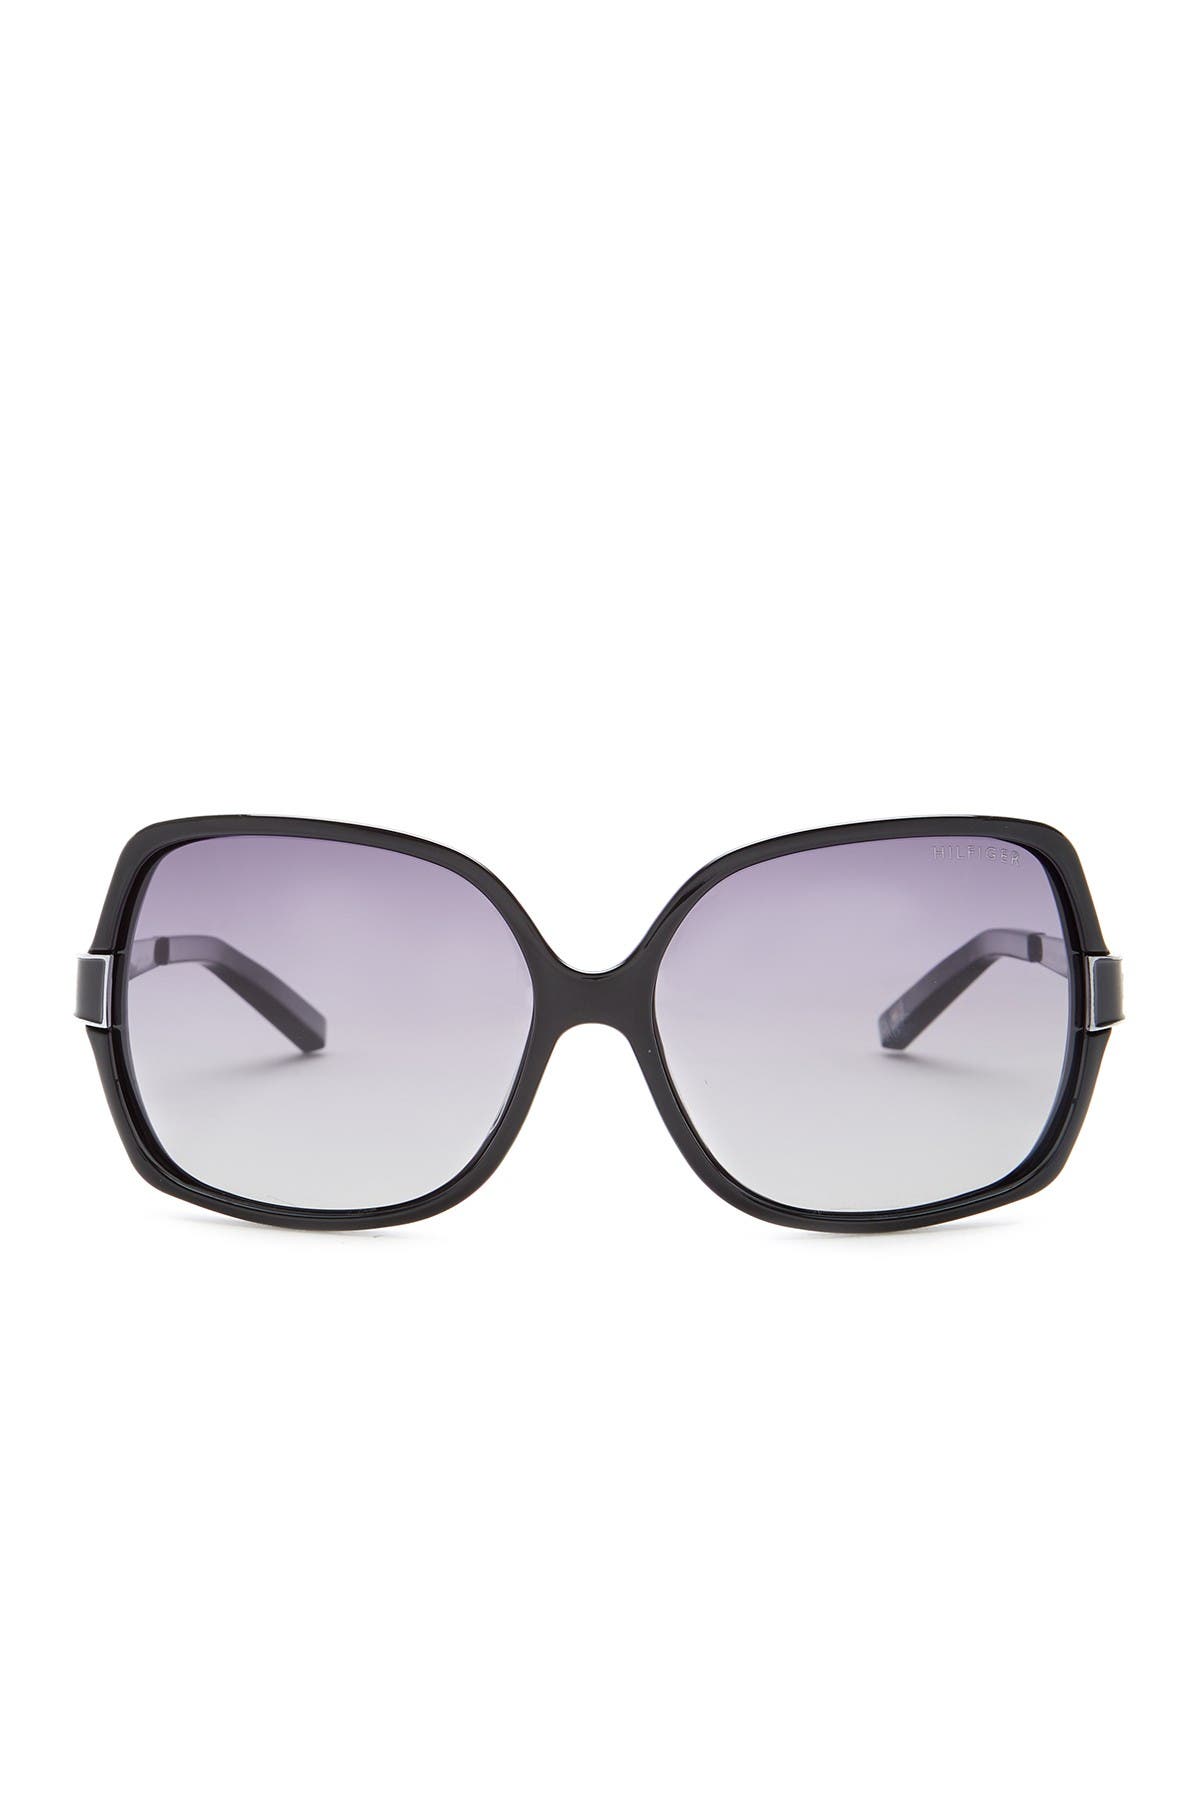 Tommy Hilfiger | Oversized Sunglasses 